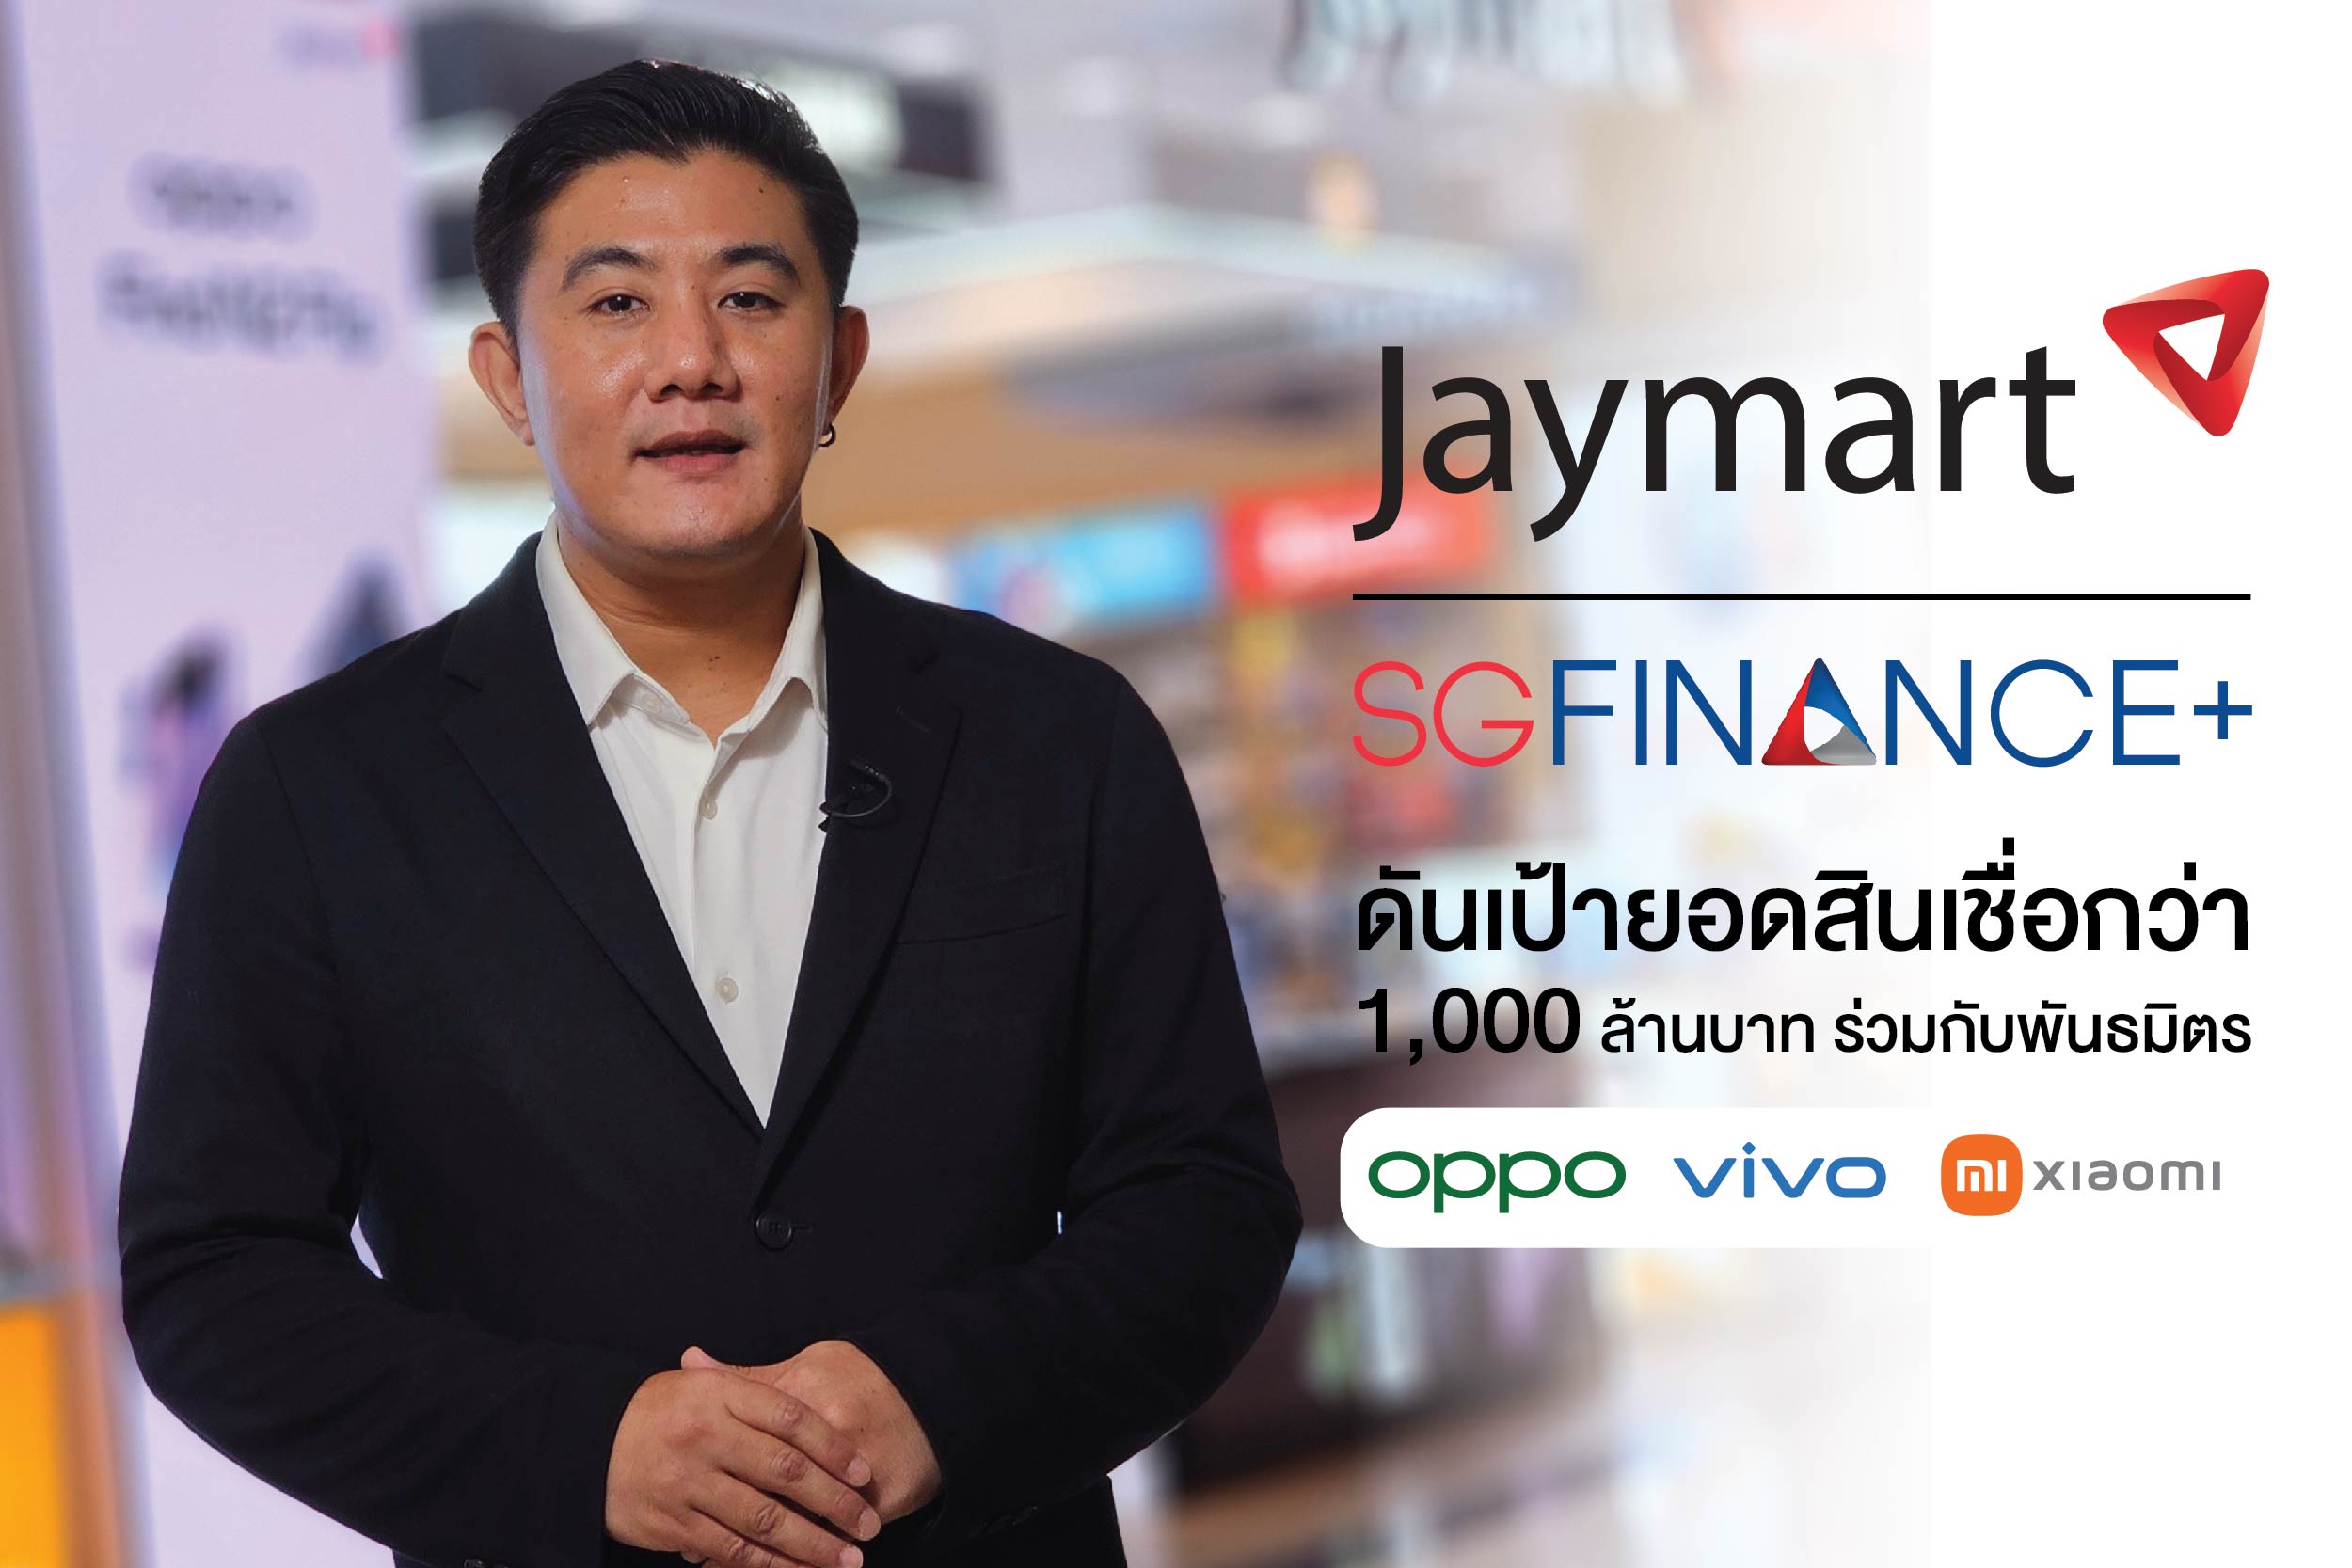 Jaymart Mobile - SGC ชูสินเชื่อ “เอสจี ไฟแนนซ์พลัส (SG Finance Plus)” จับมือพันธมิตรออปโป้ (OPPO) วีโว่ (vivo) และ Xiaomi (เสี่ยวมี่) ดันเป้ายอดสินเชื่อกว่า 1,000 ล้านบาทในปีนี้